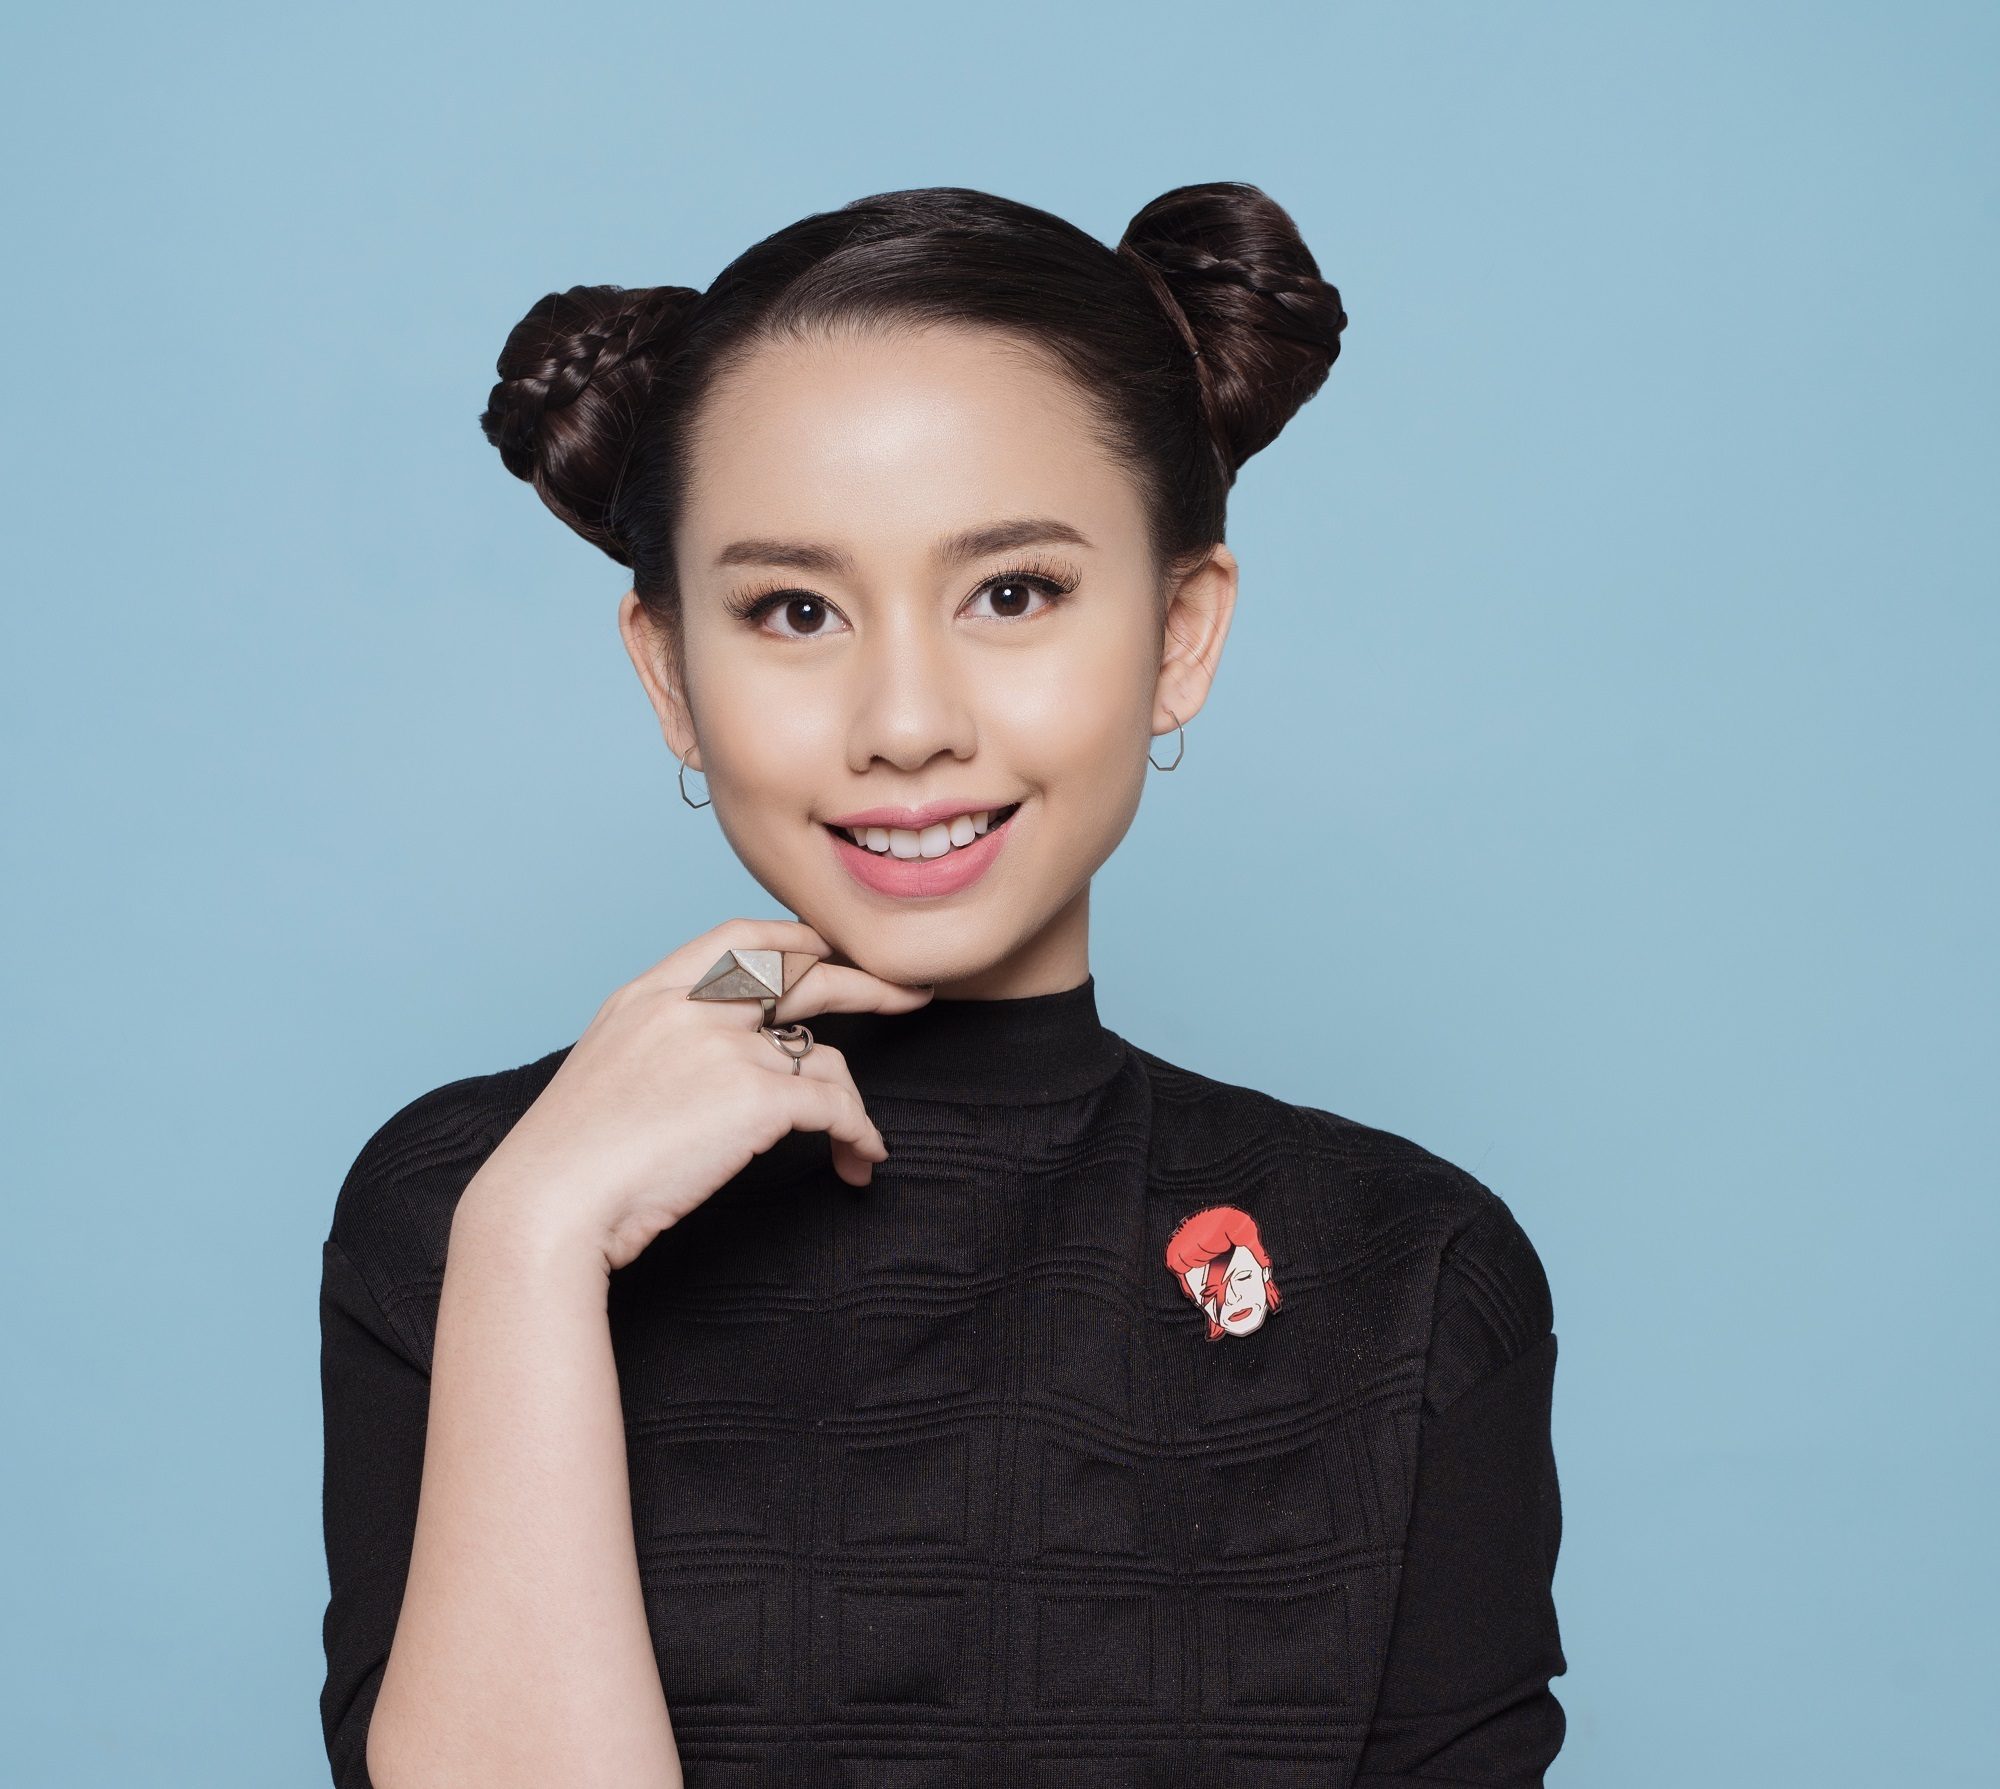 Advent calendar: Closeup shot of Asian girl with black hair in space buns wearing a black shirt